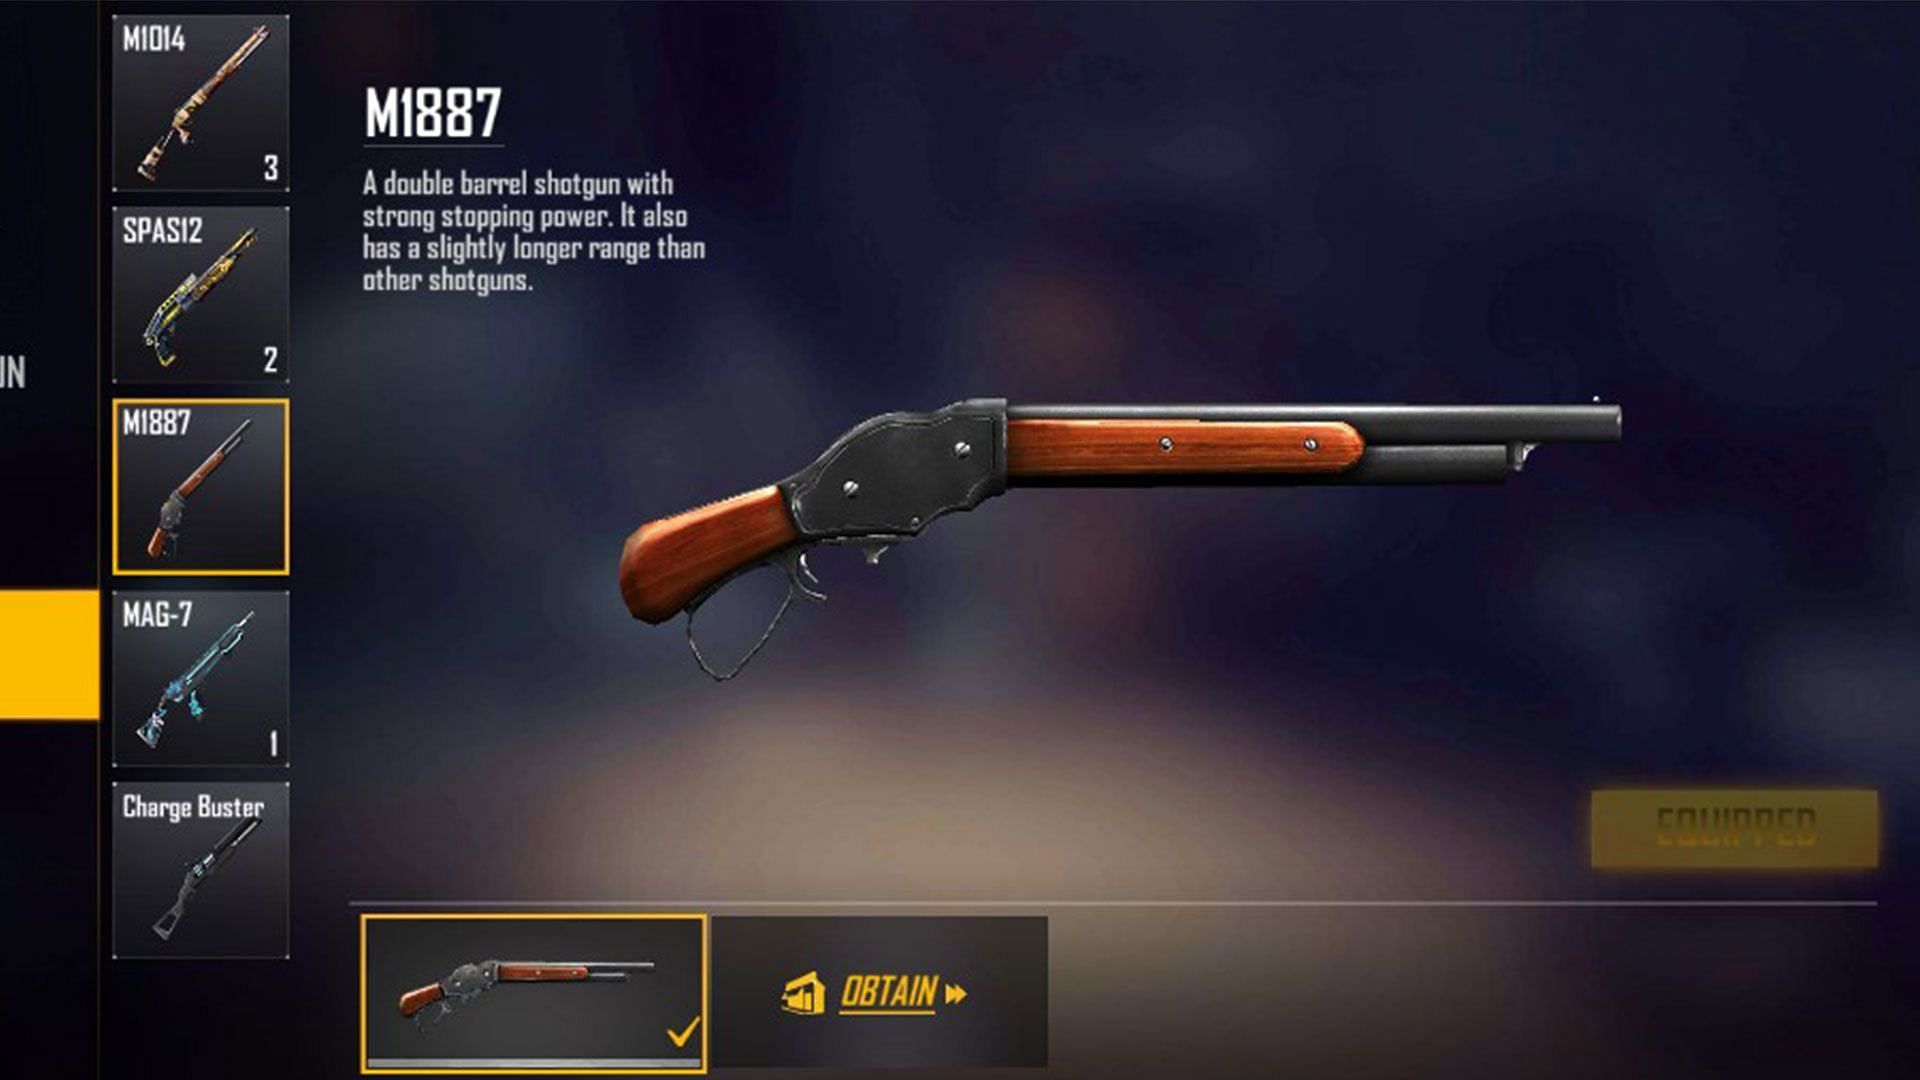 M1887 has longer range than other shotguns in Free Fire Max (Image via Garena)